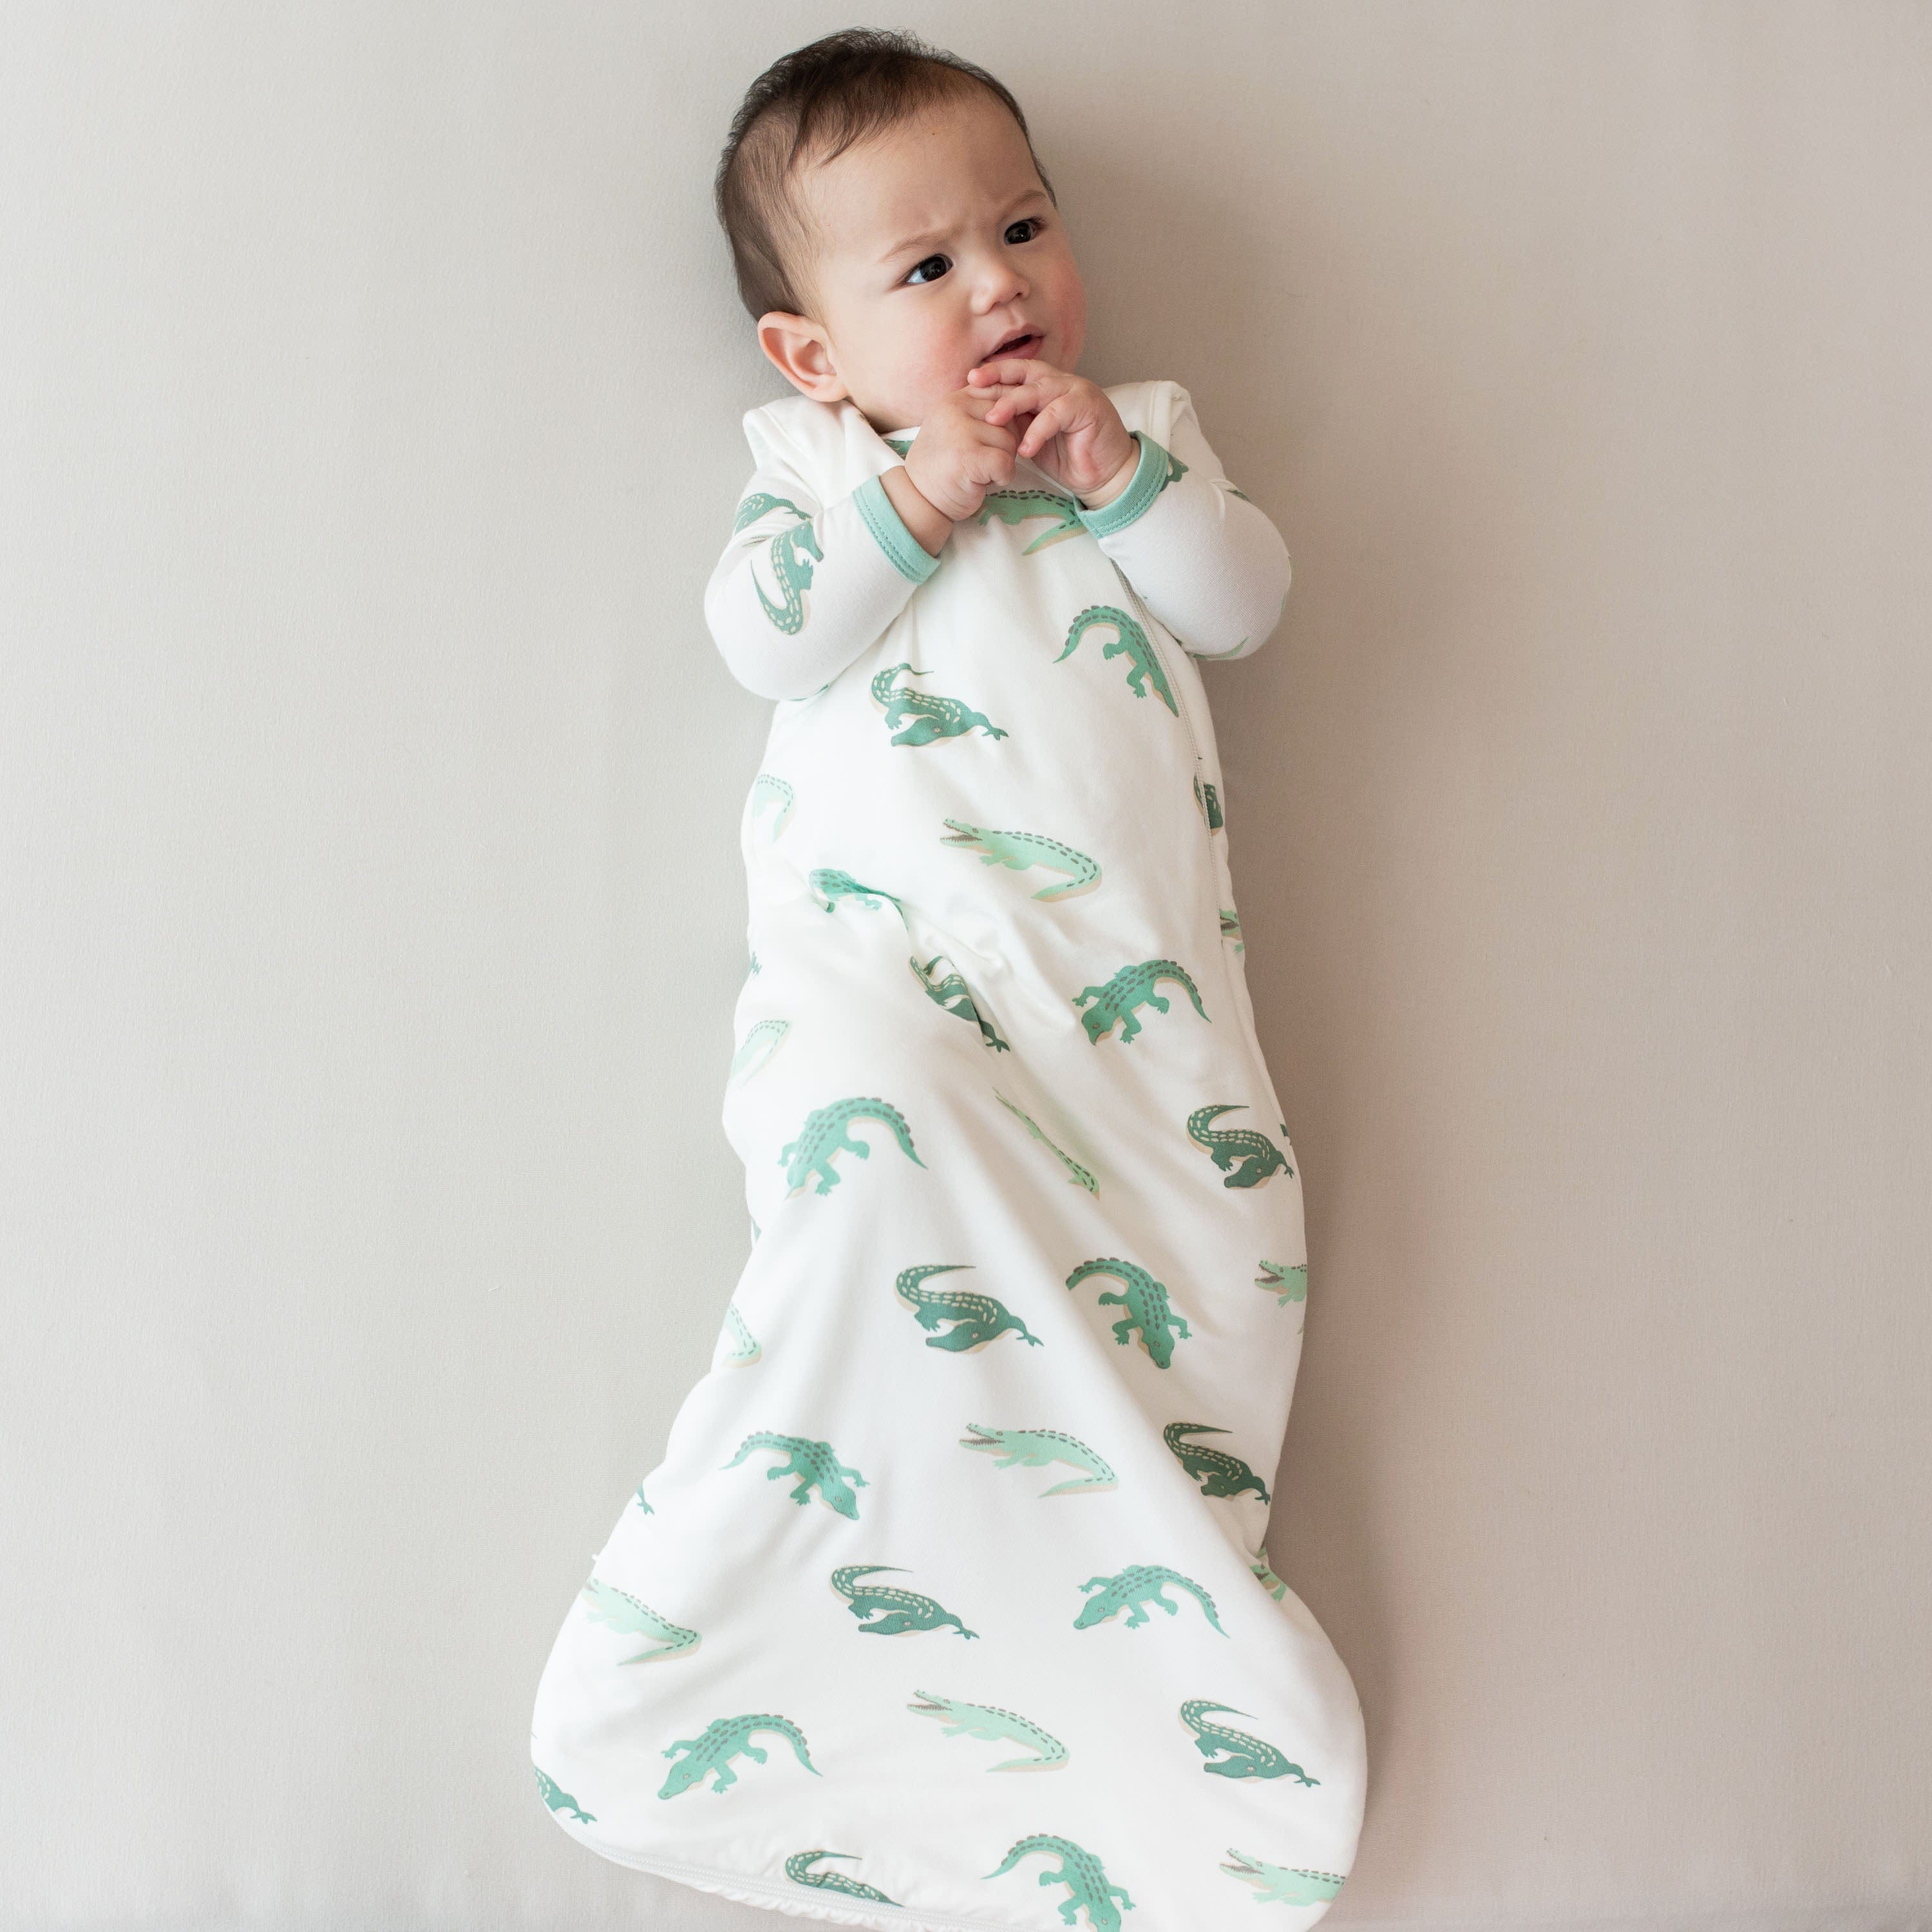 Infant wearing Kyte Baby Sleep Bag in Crocodile 1.0